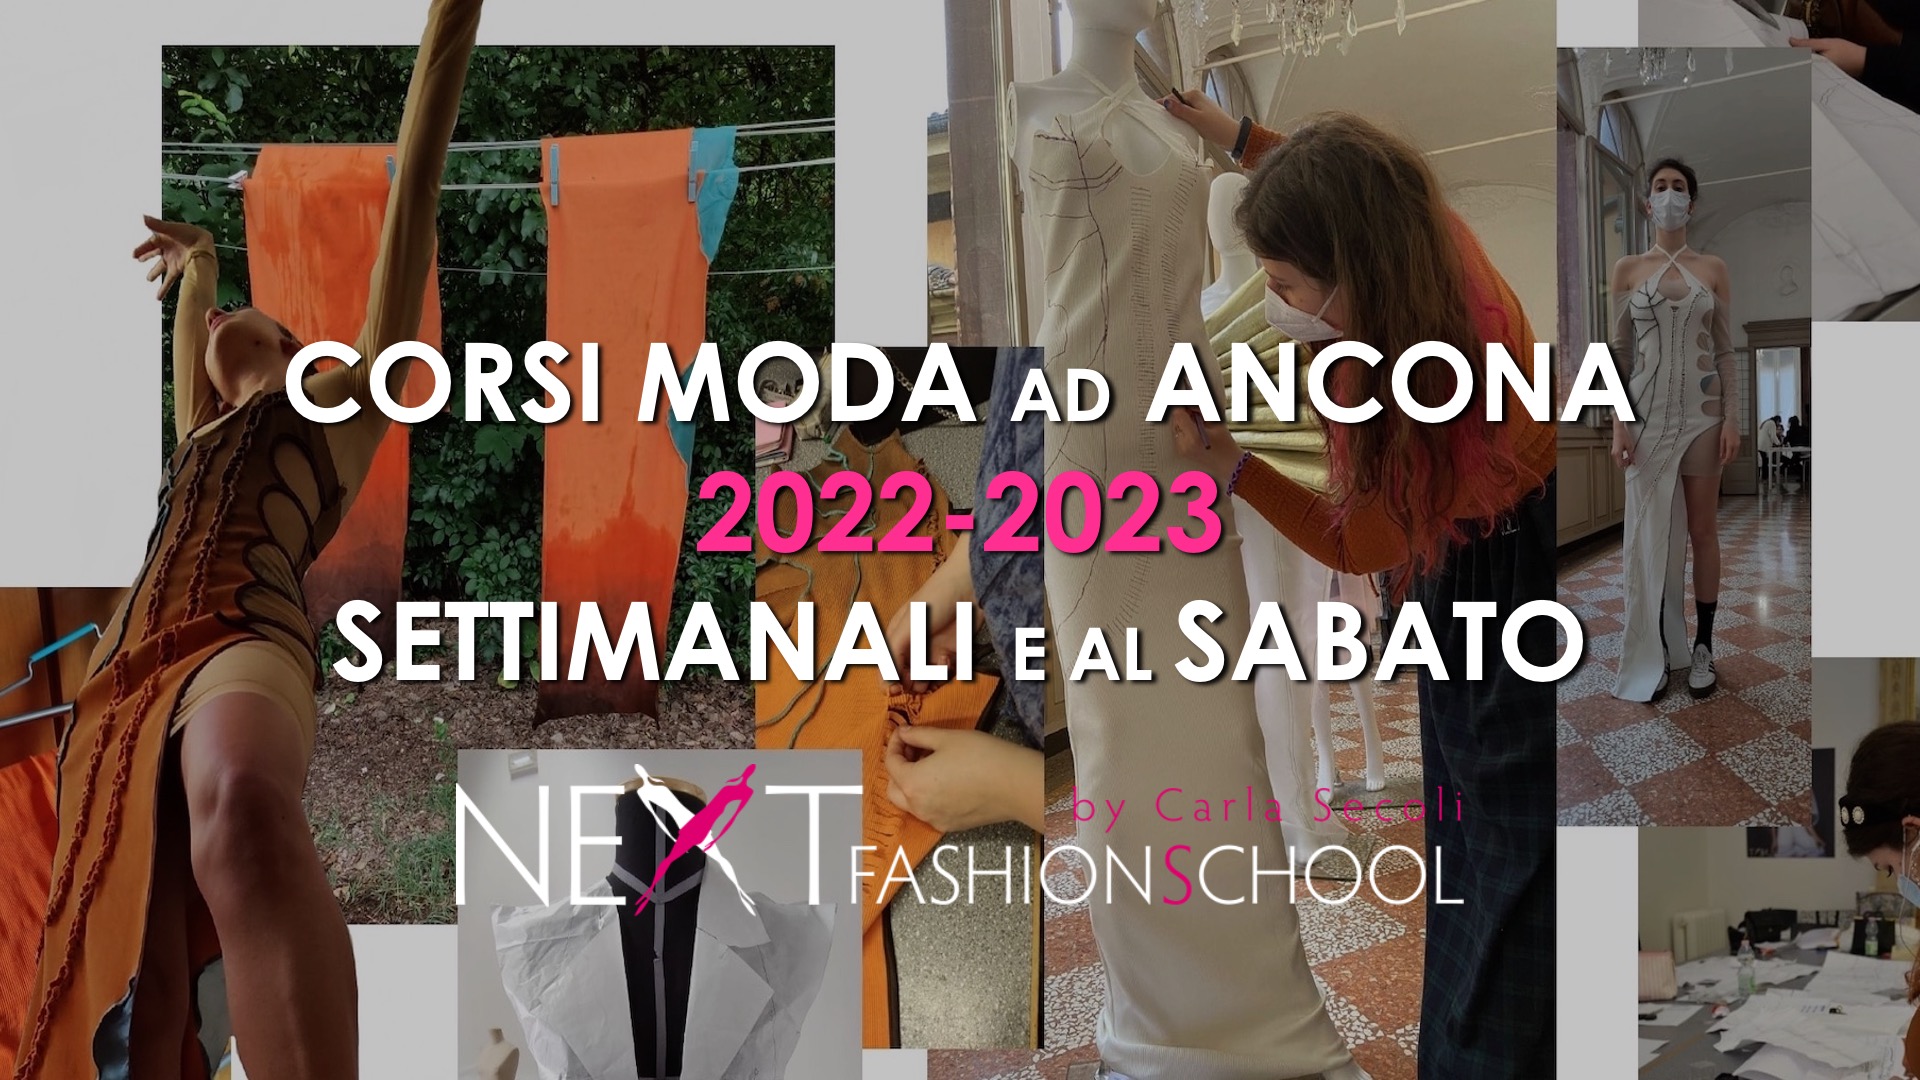 Corsi moda ad Ancona 2022-2023